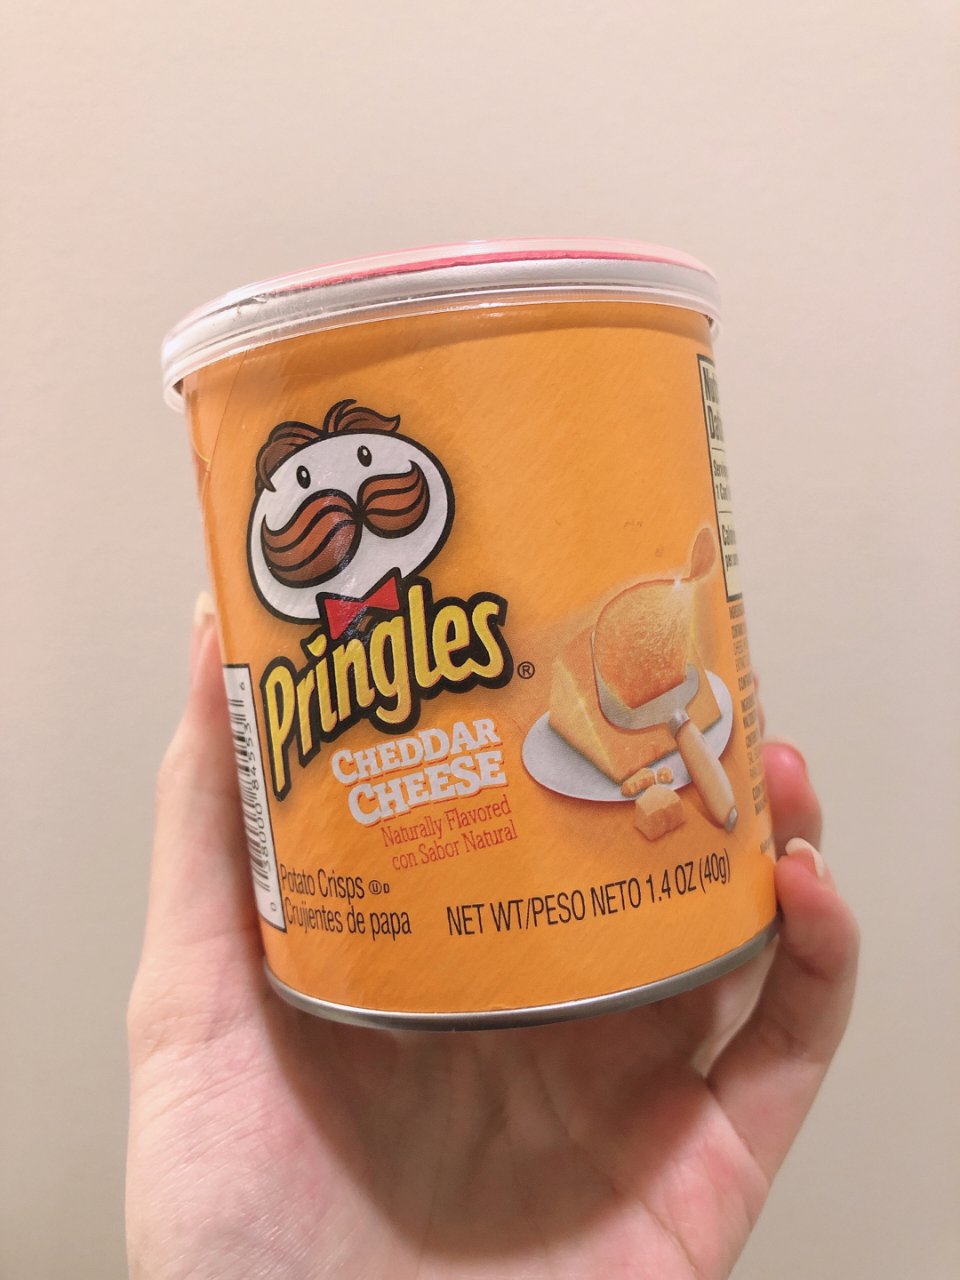 Pringles 品客,薯片